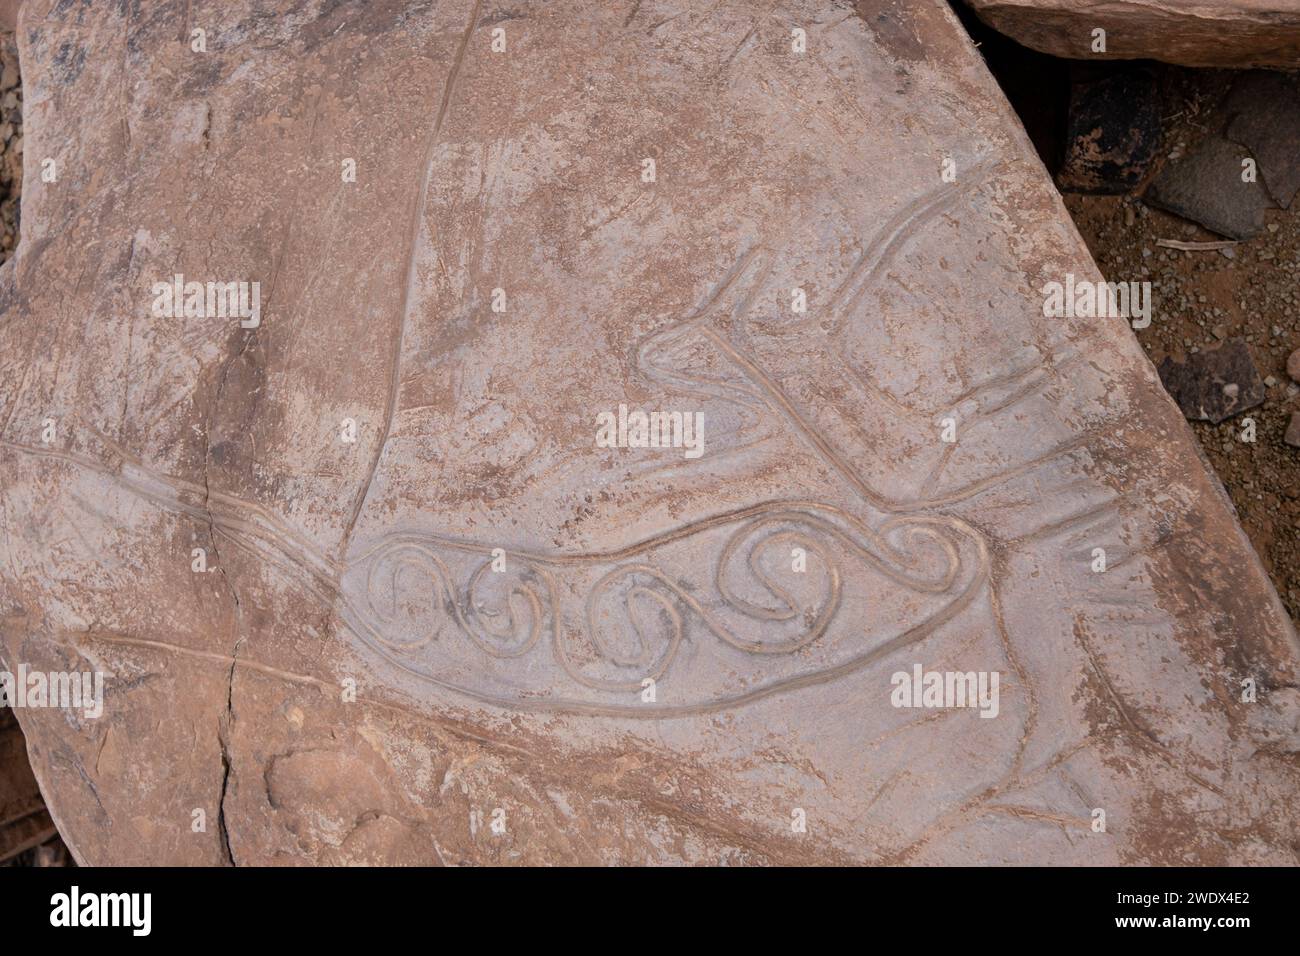 petroglifo, yacimiento rupestre de Aït Ouazik, finales del Neolítico, Marruecos, Africa Stock Photo